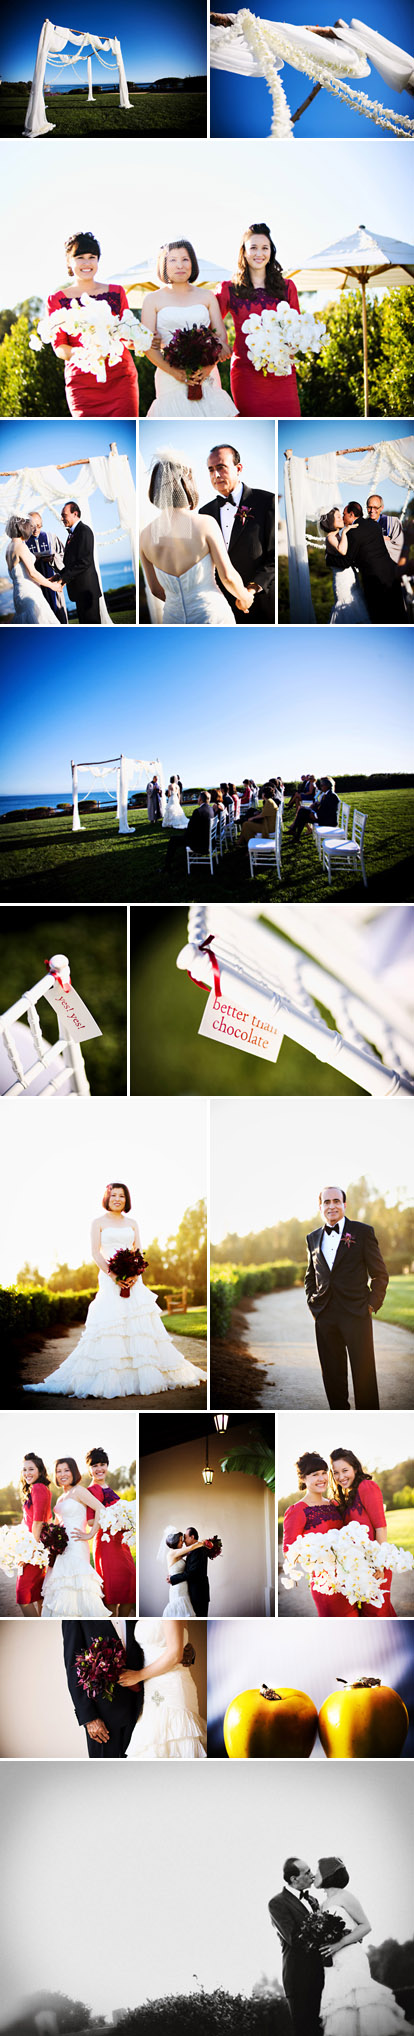 White outdoor wedding ceremony at Bacara Resort and Spa, Santa Barbara, California, images by Trista Lerit